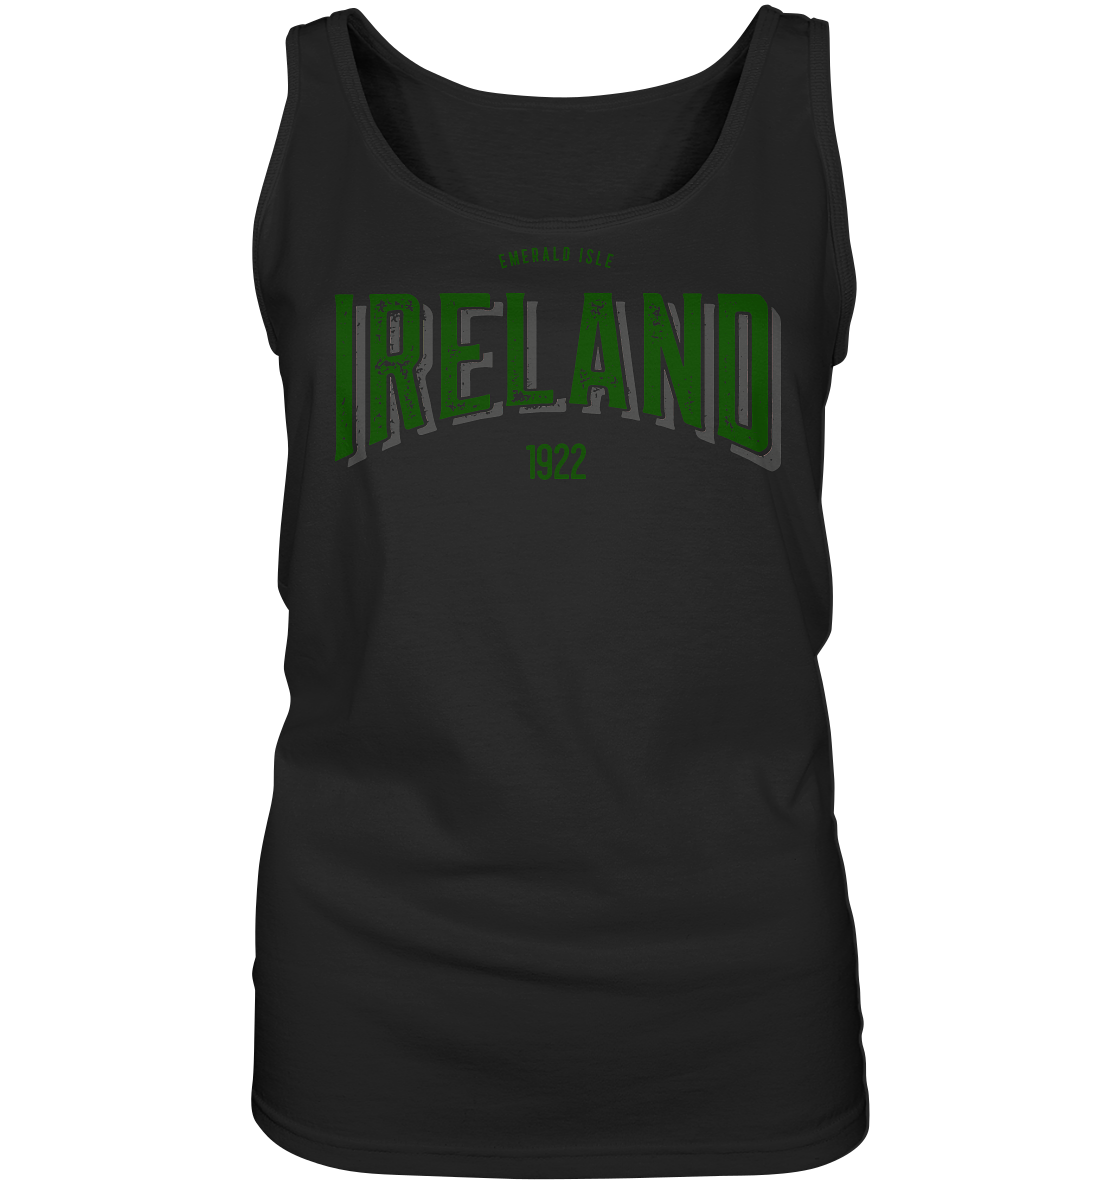 Ireland "Emerald Isle 1922" - Ladies Tank-Top